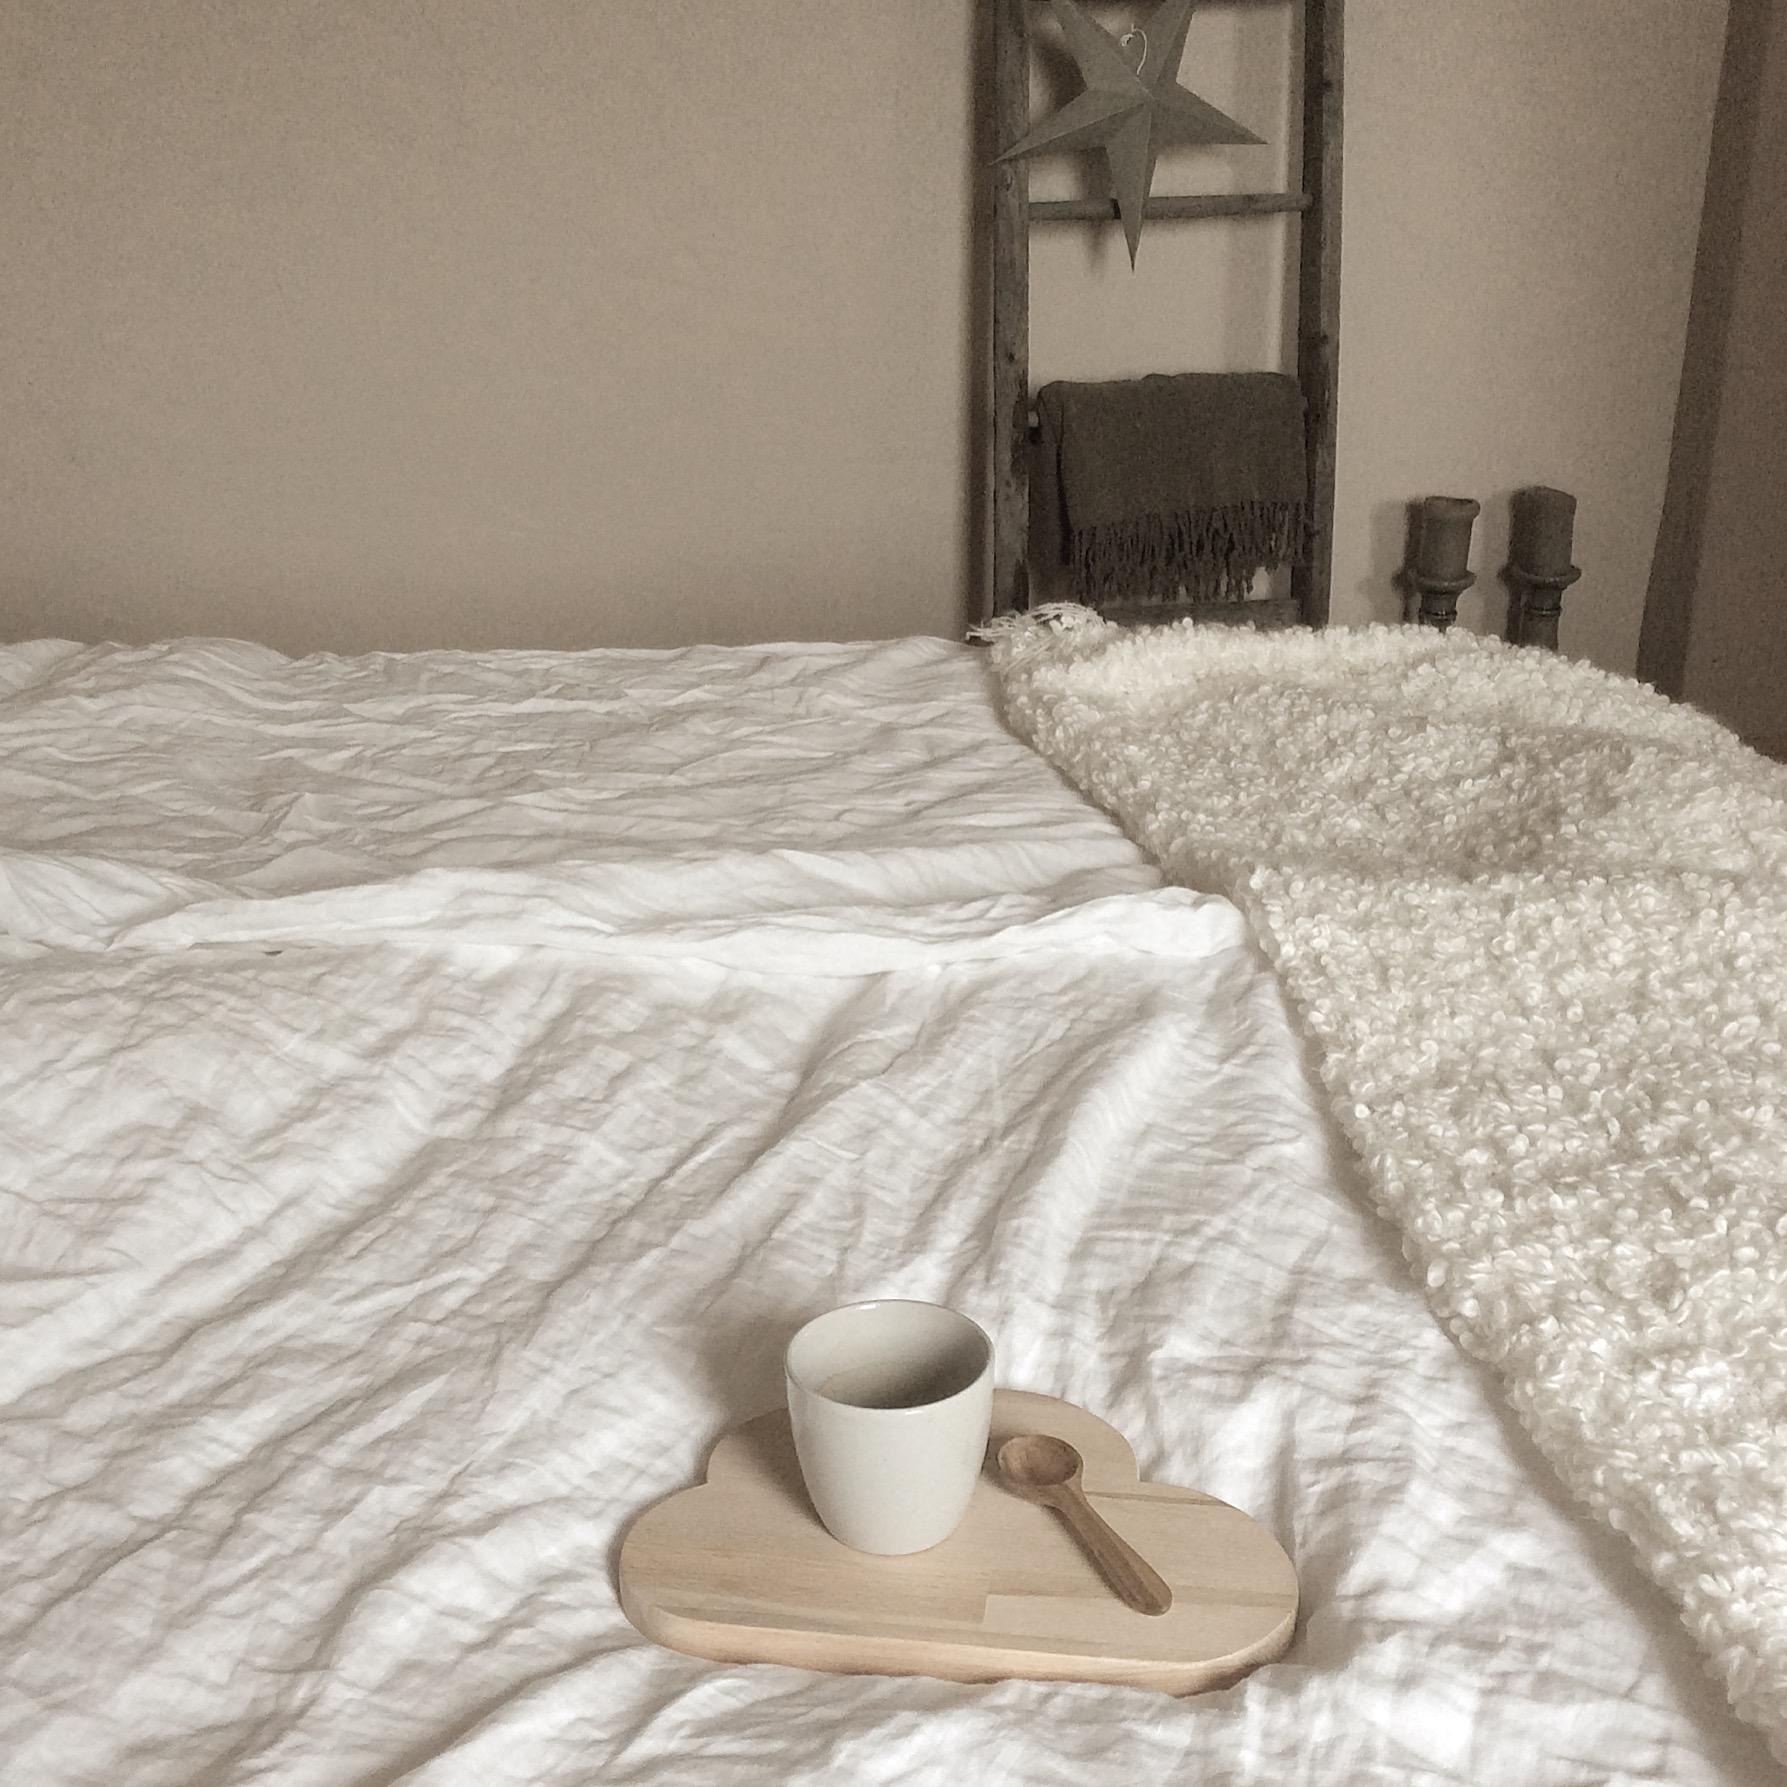 Ab ins Bett 😉💫 #Schlafzimmer #hygge #teatime